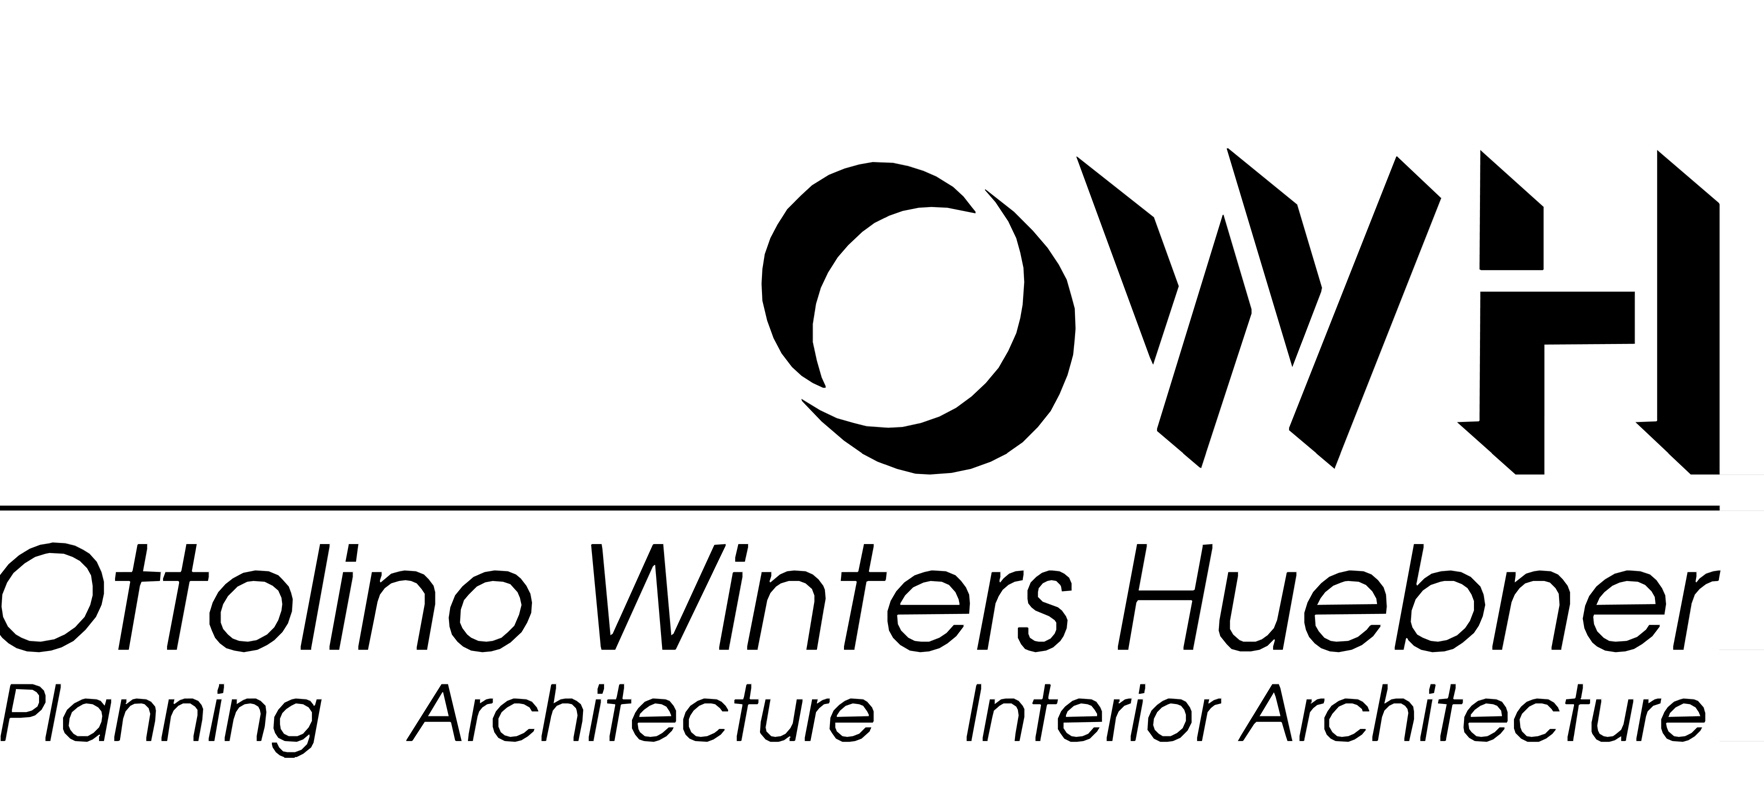 Ottolino Winters Huebner Logo. Planning. Architecture. Interior Architecture.